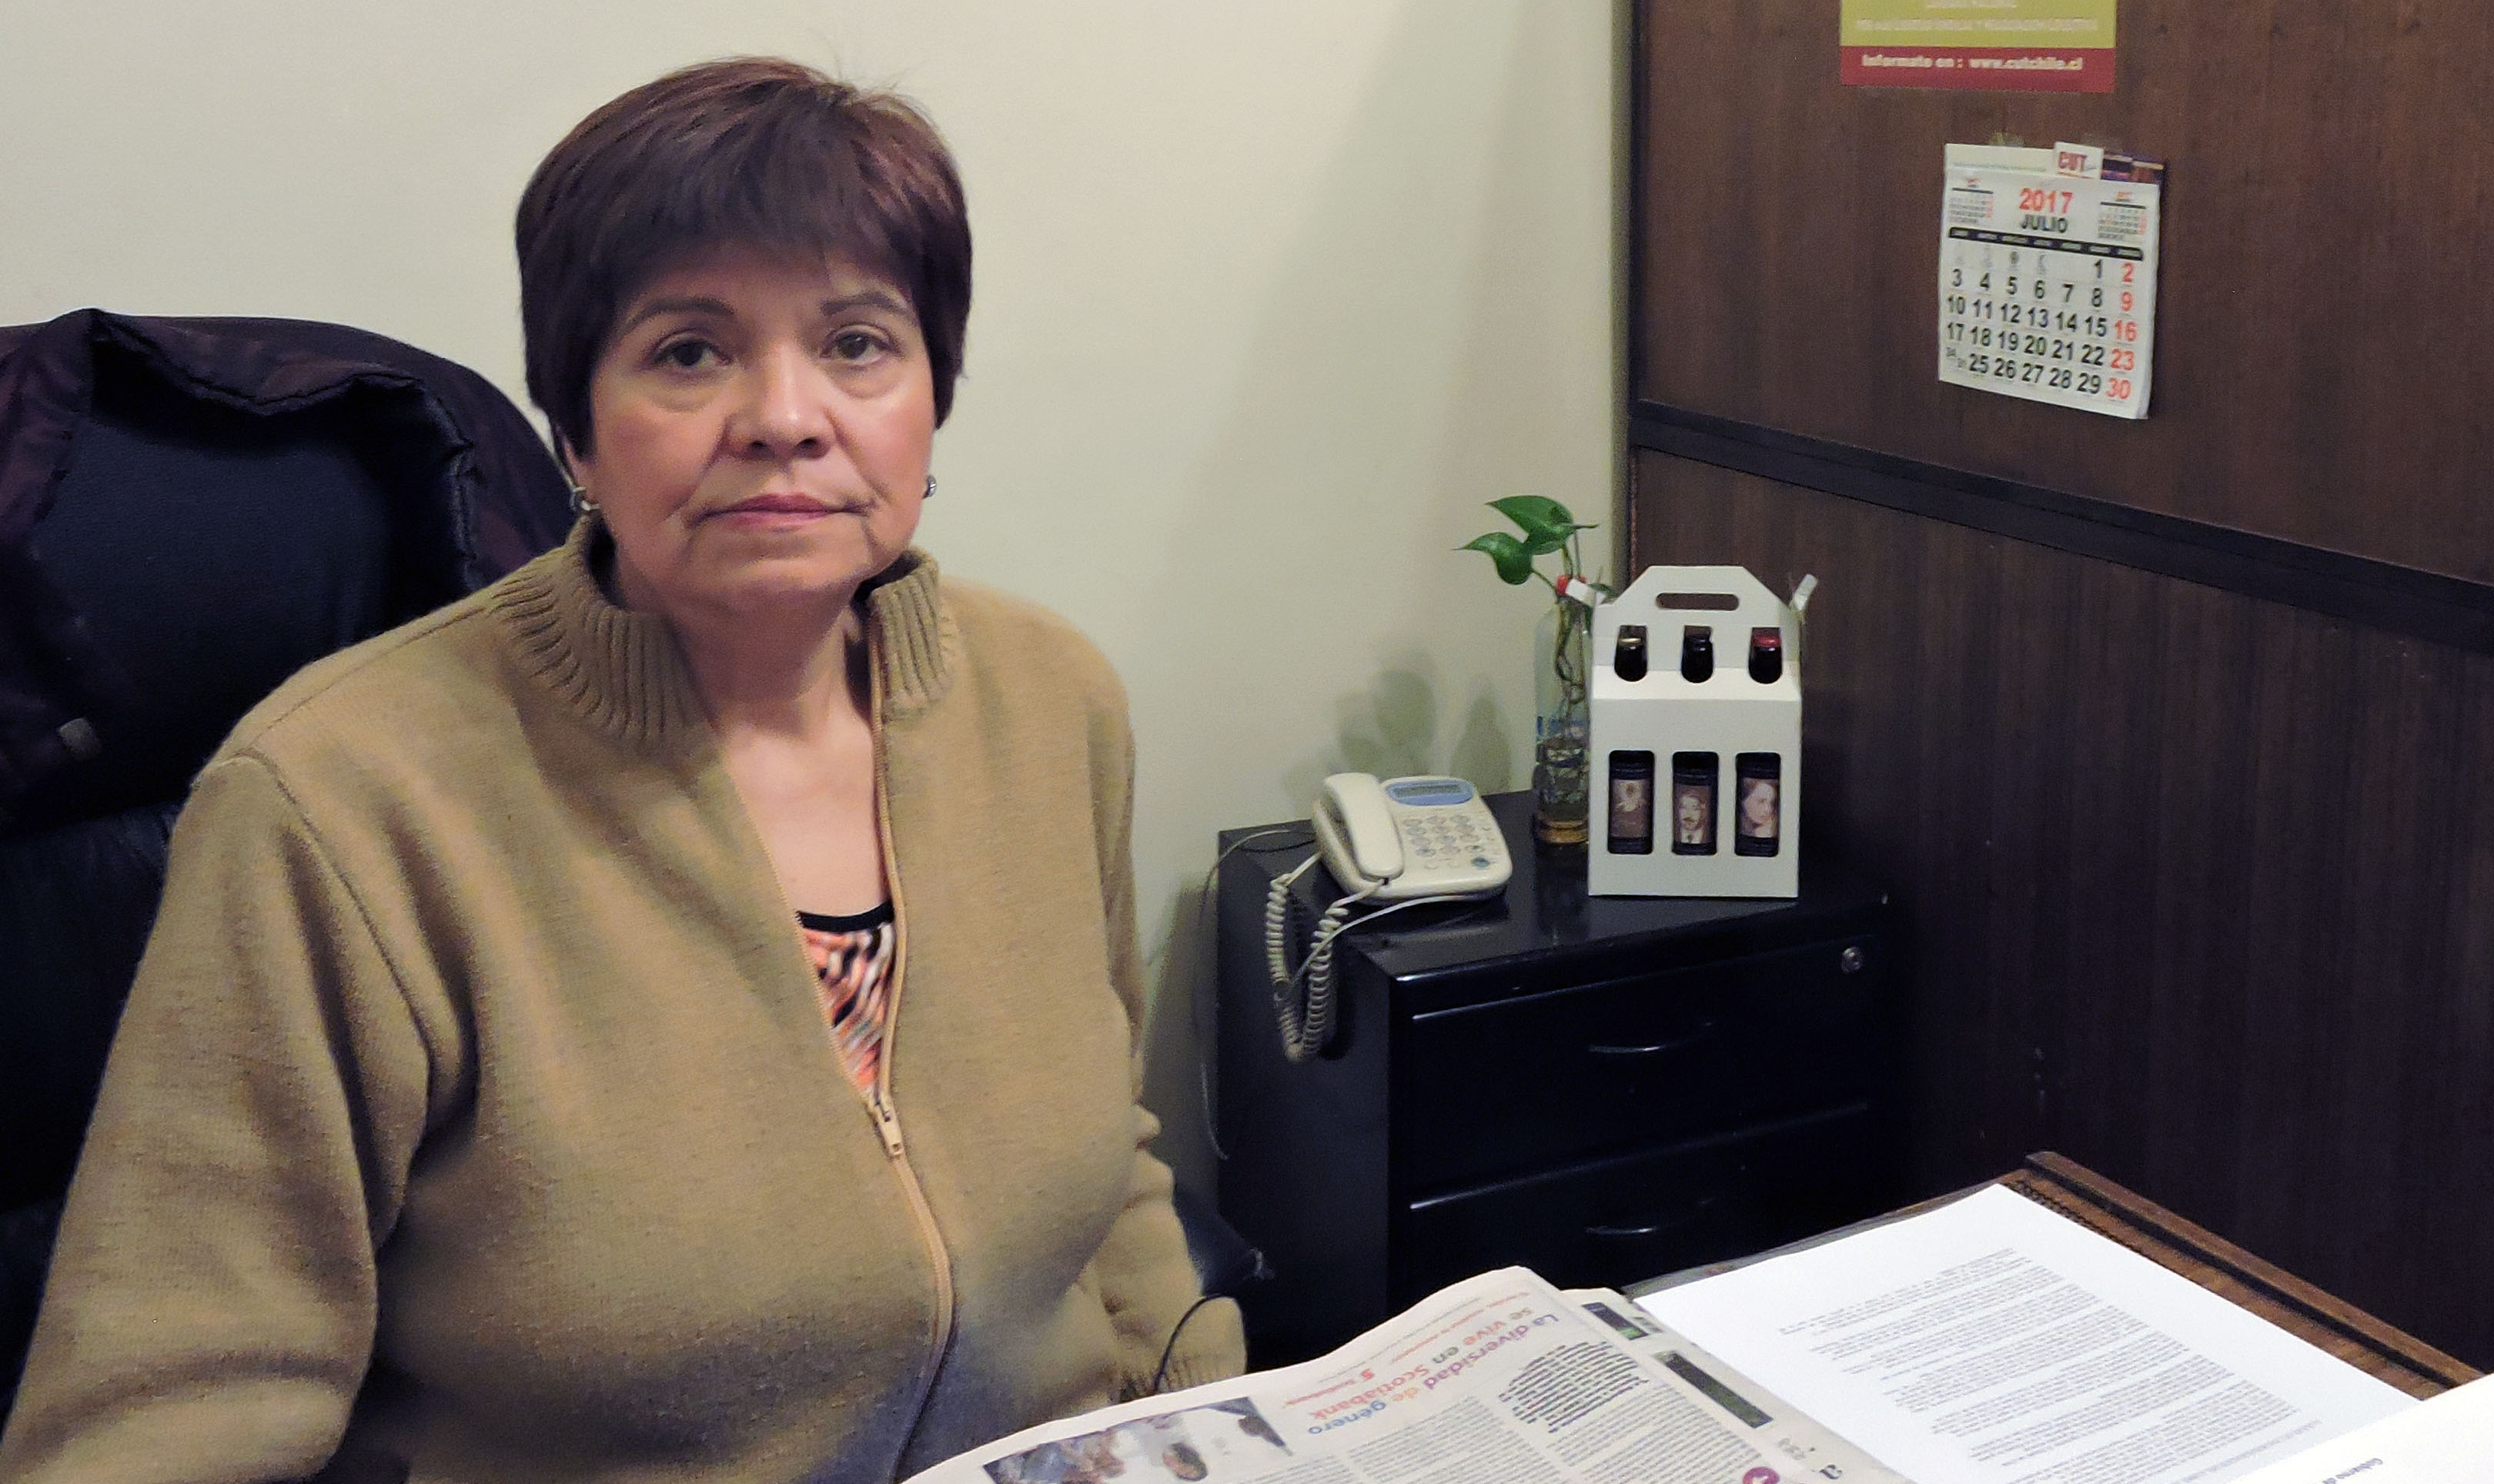 “Para receber aposentadoria integral, precisaríamos trabalhar até os 120 anos”, denunciou Amália Pereira, vice-presidente da CUT-Chile